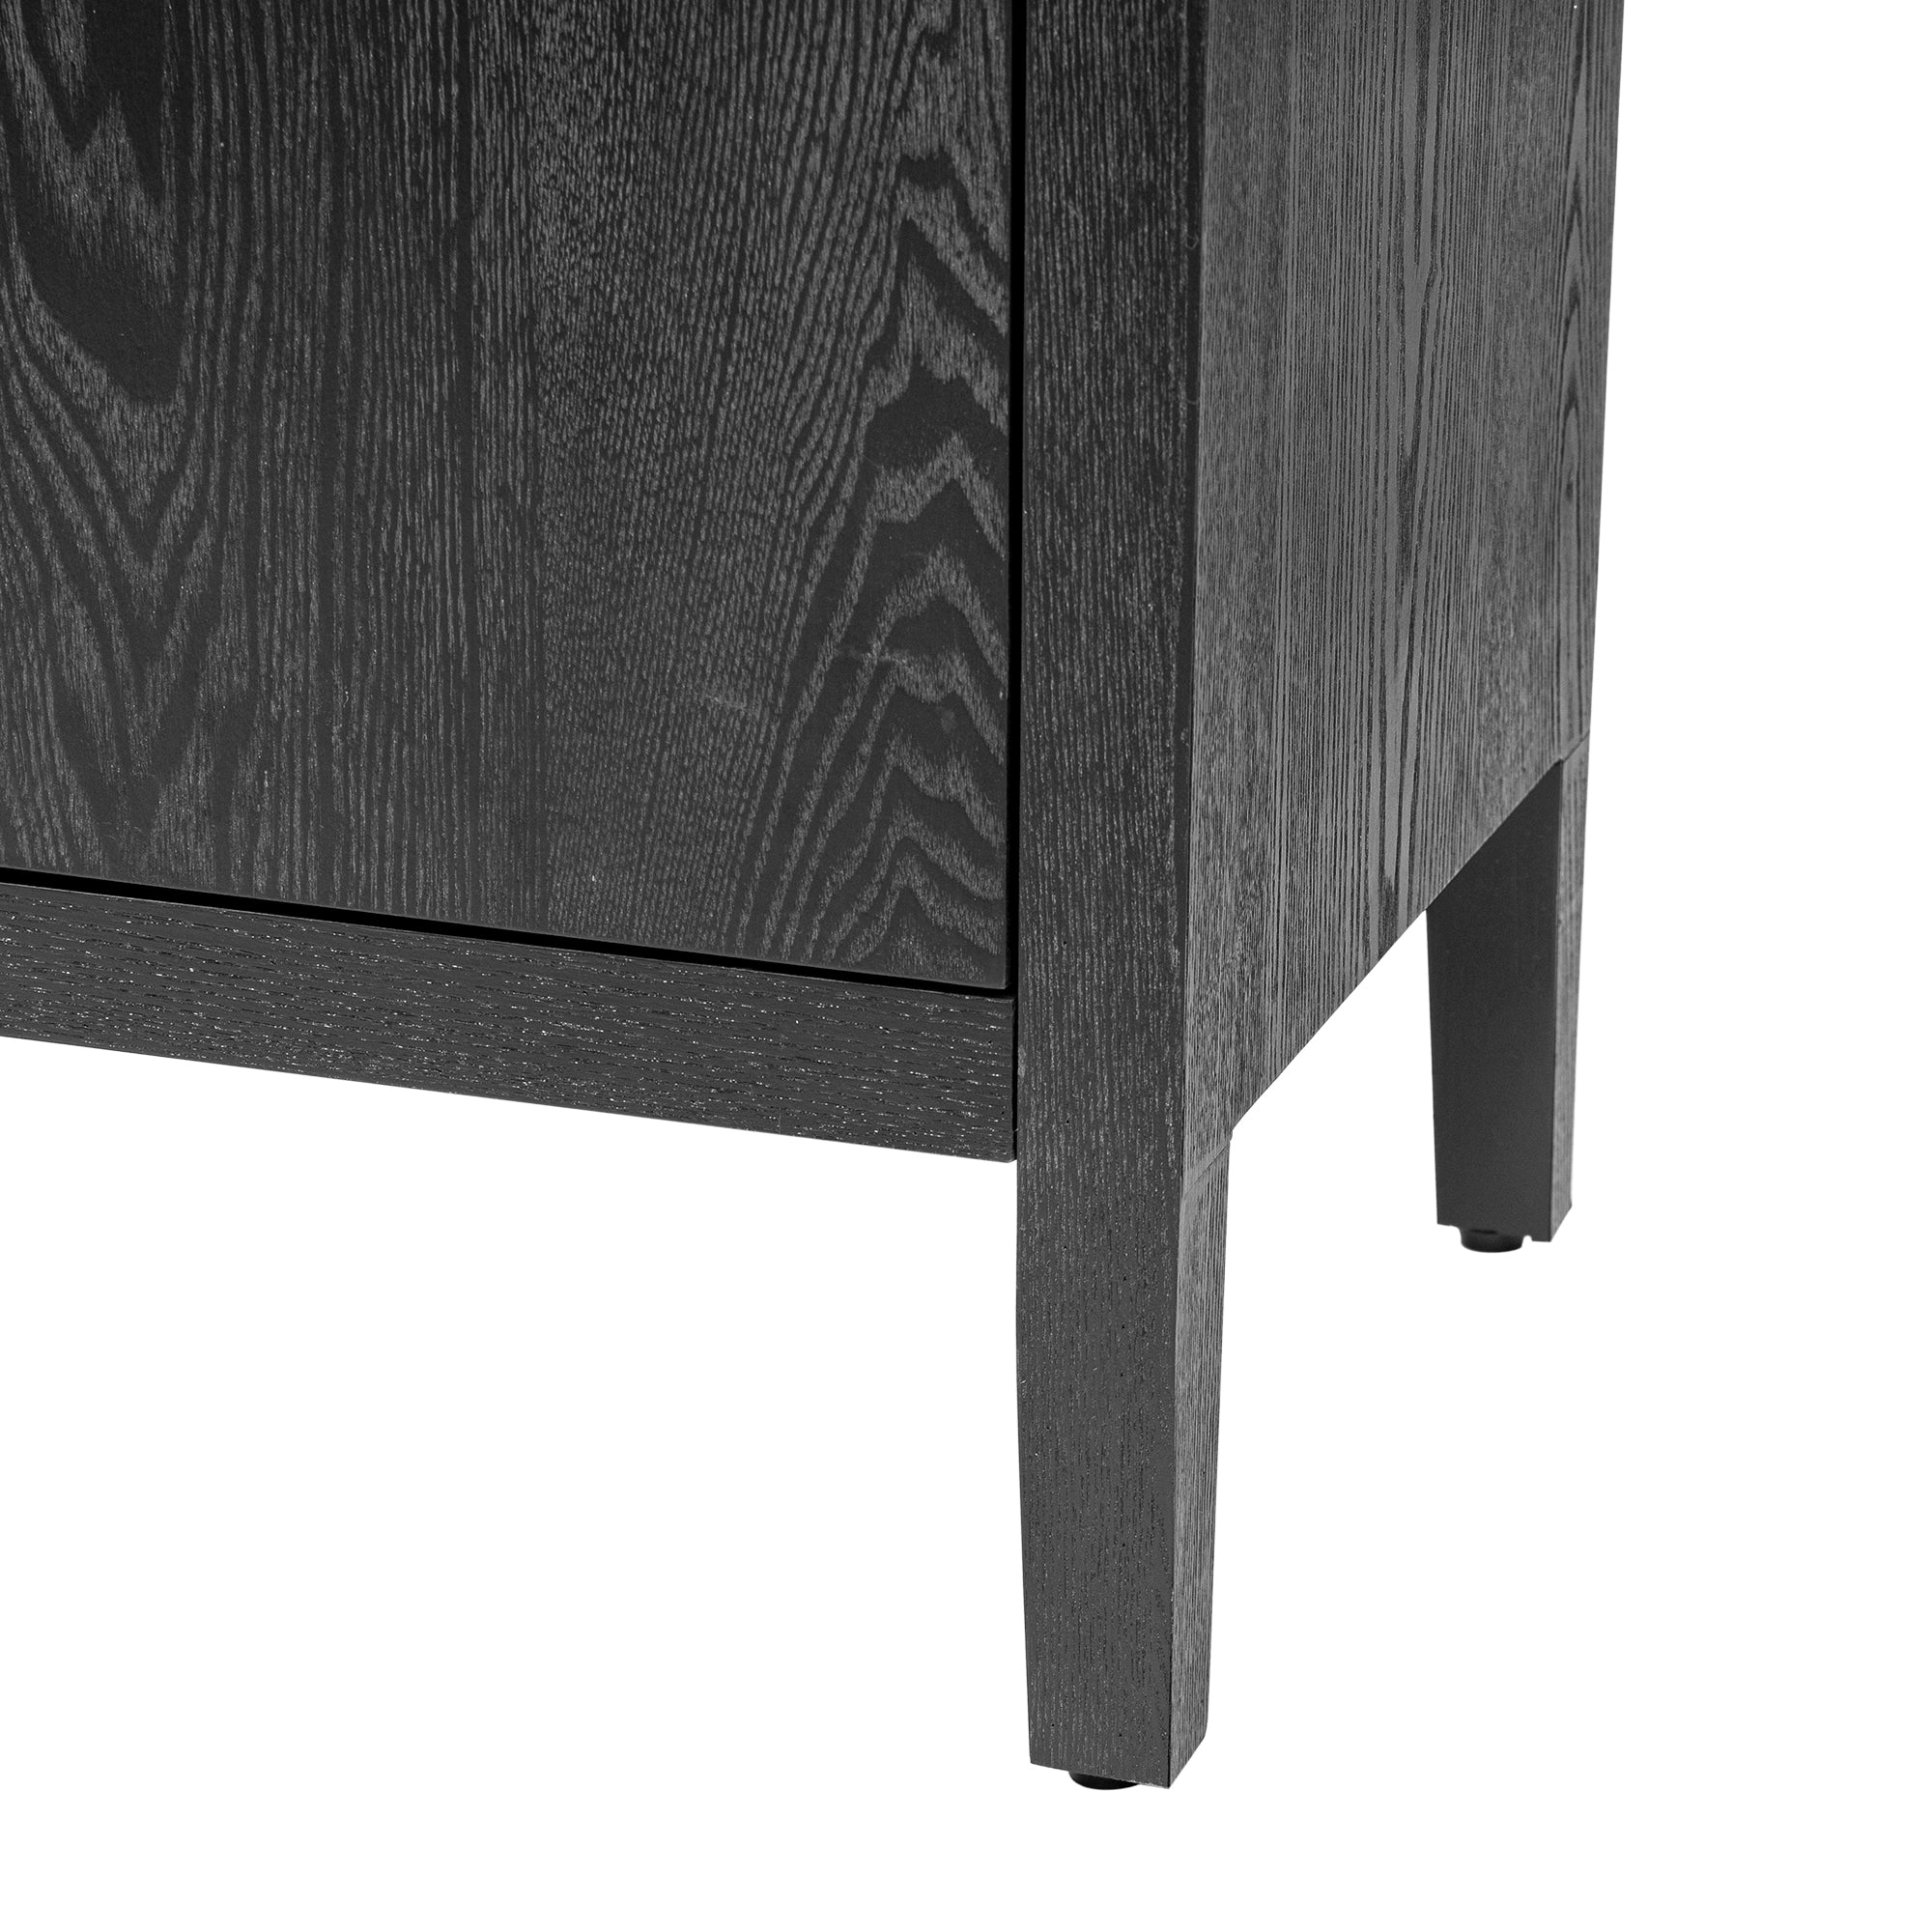 U STYLE Storage Cabinet Sideboard Wooden Cabinet with black-mdf